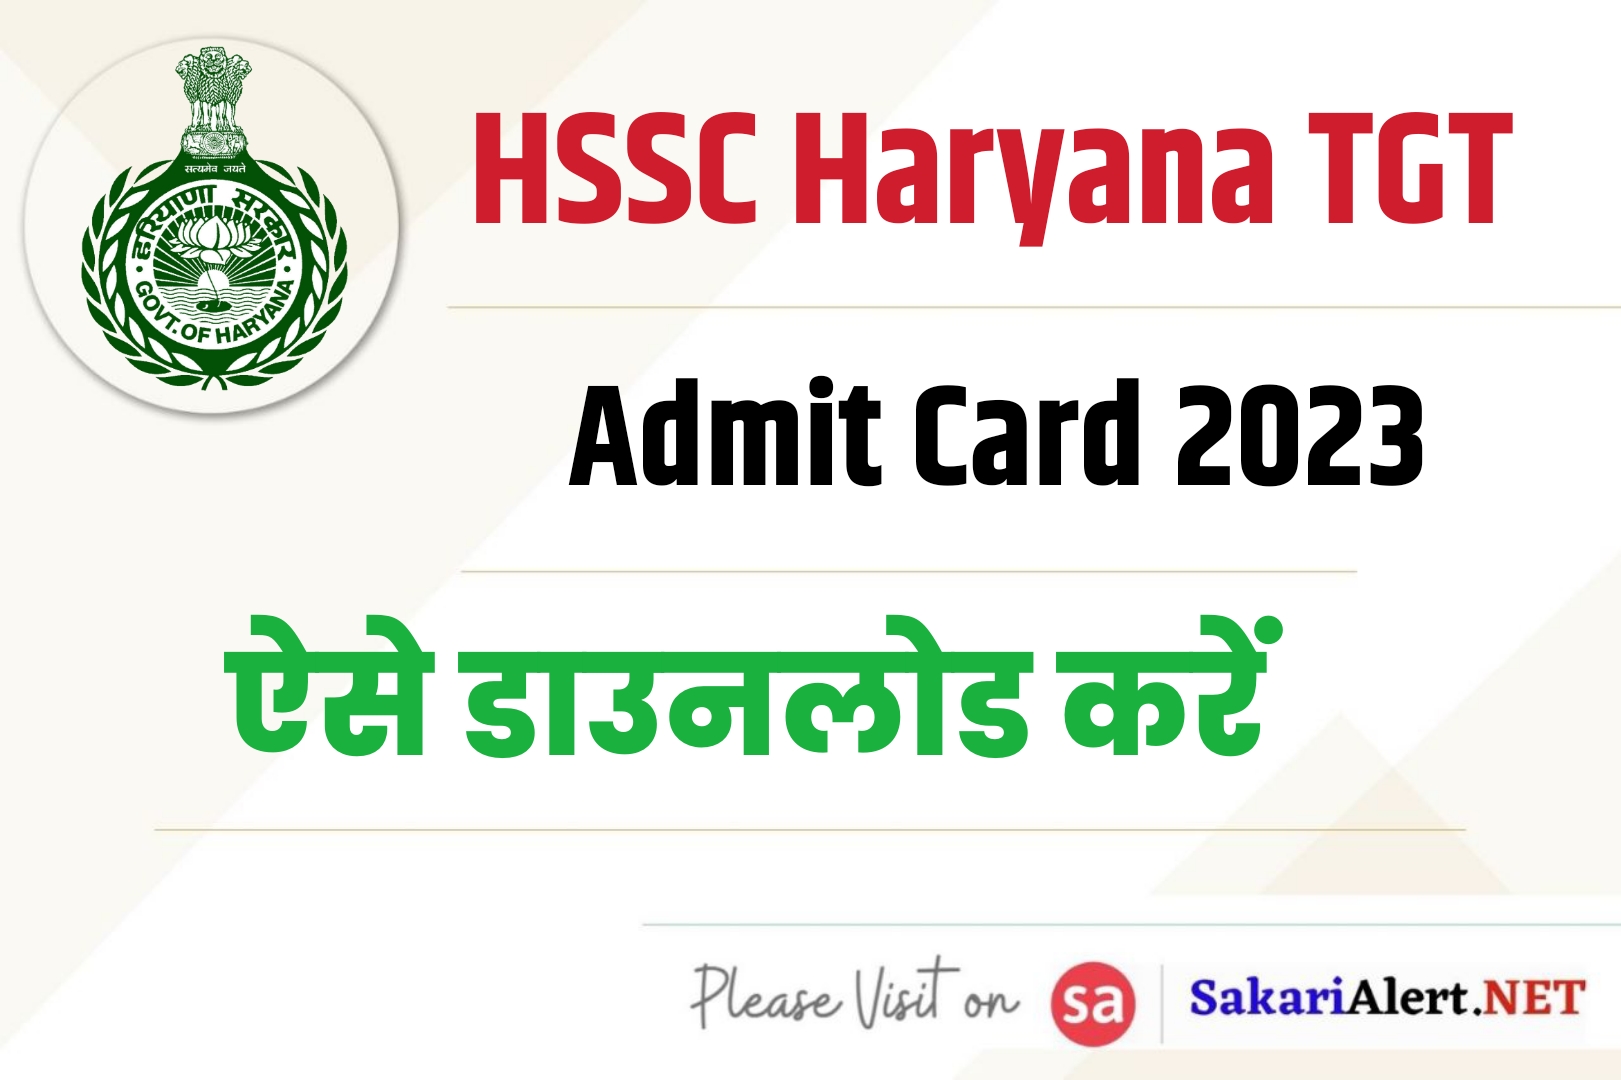 HSSC Haryana TGT Admit Card 2023